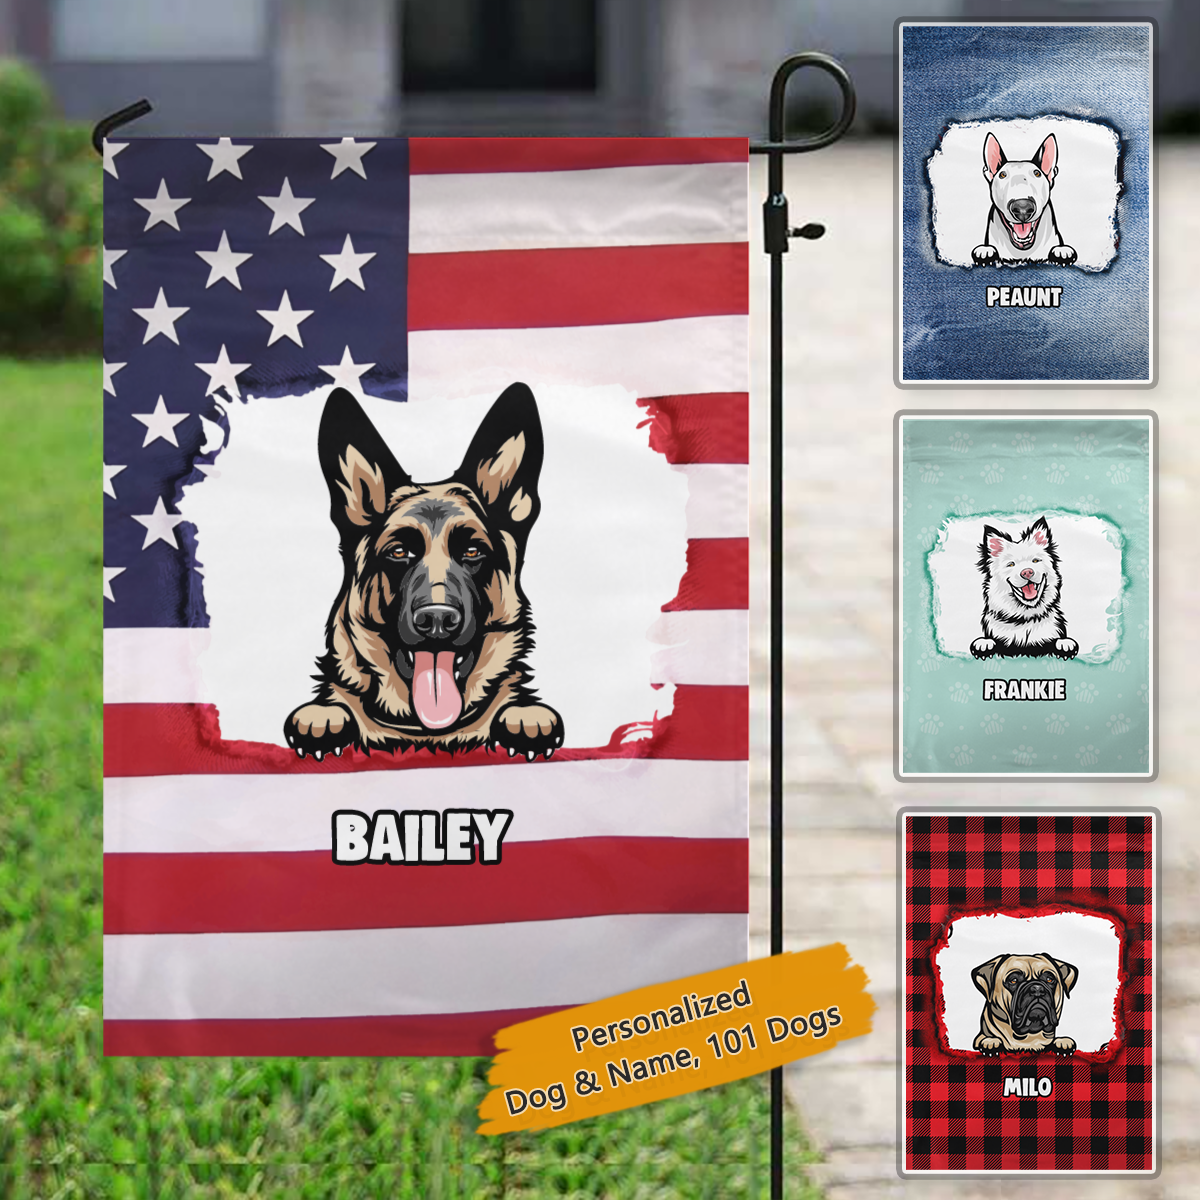 Tearing Peeking Dog Personalized Dog Decorative Garden Flags